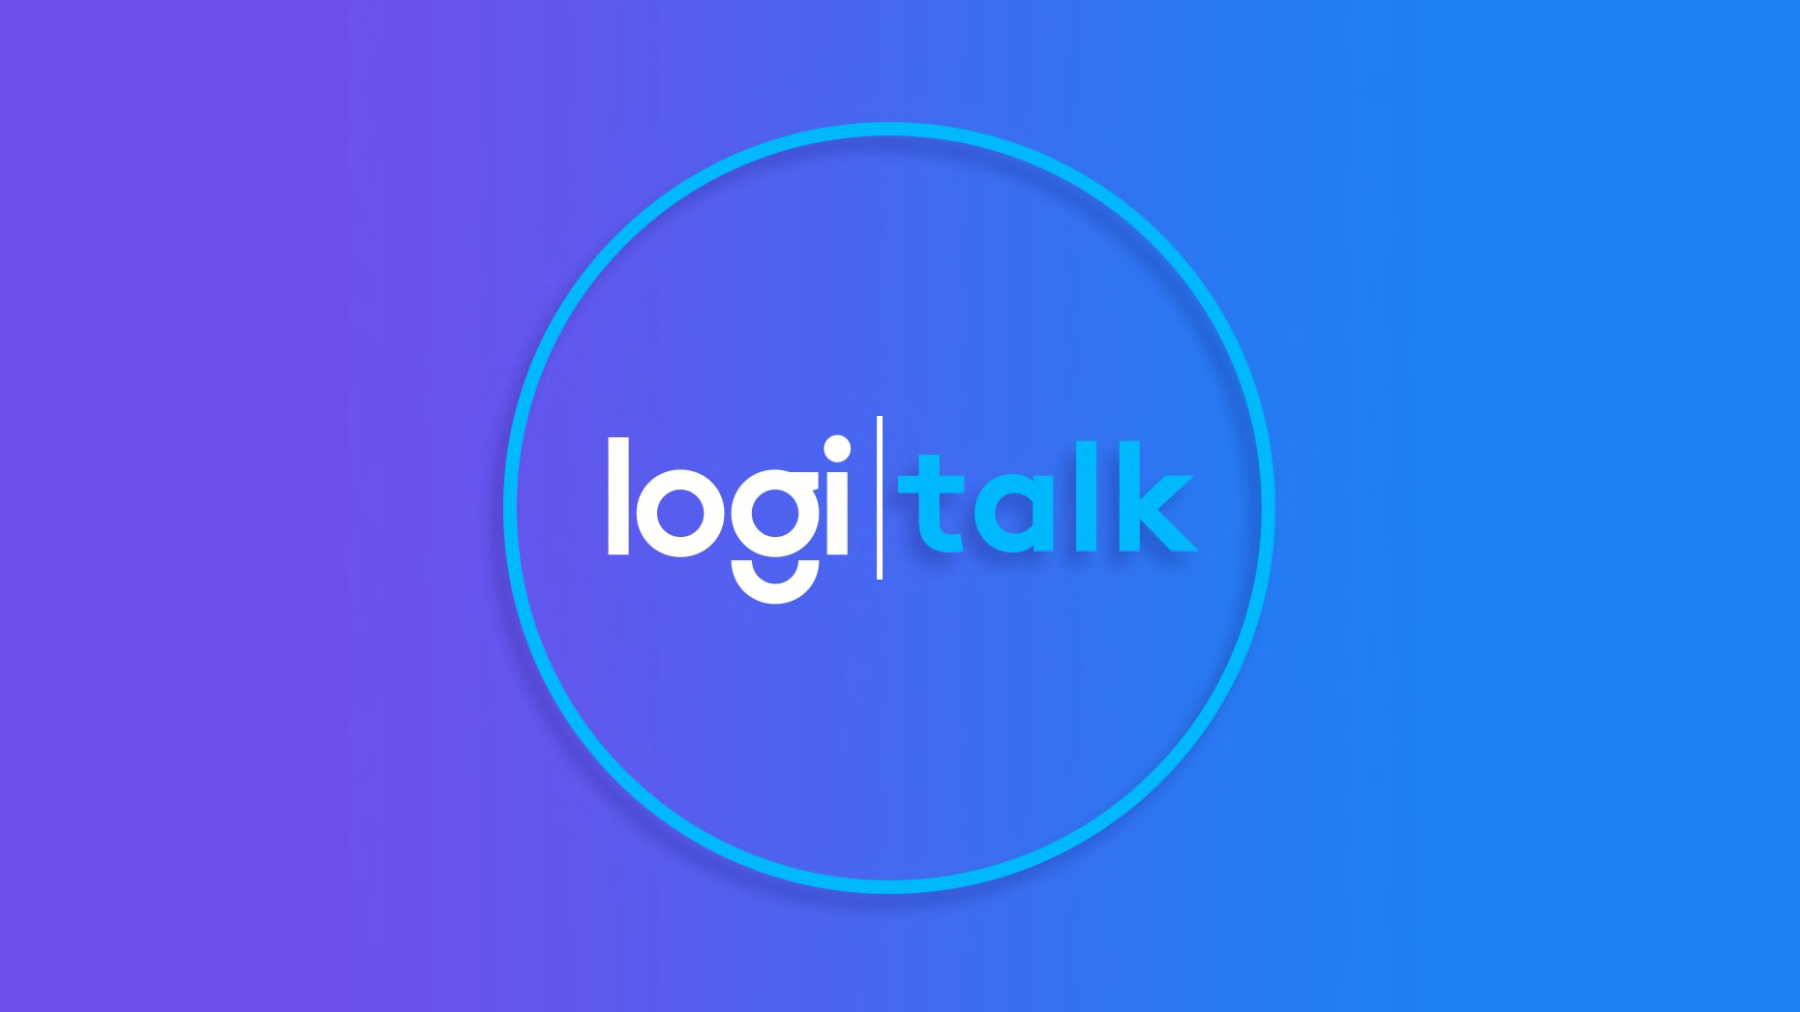 Logi talkロゴ